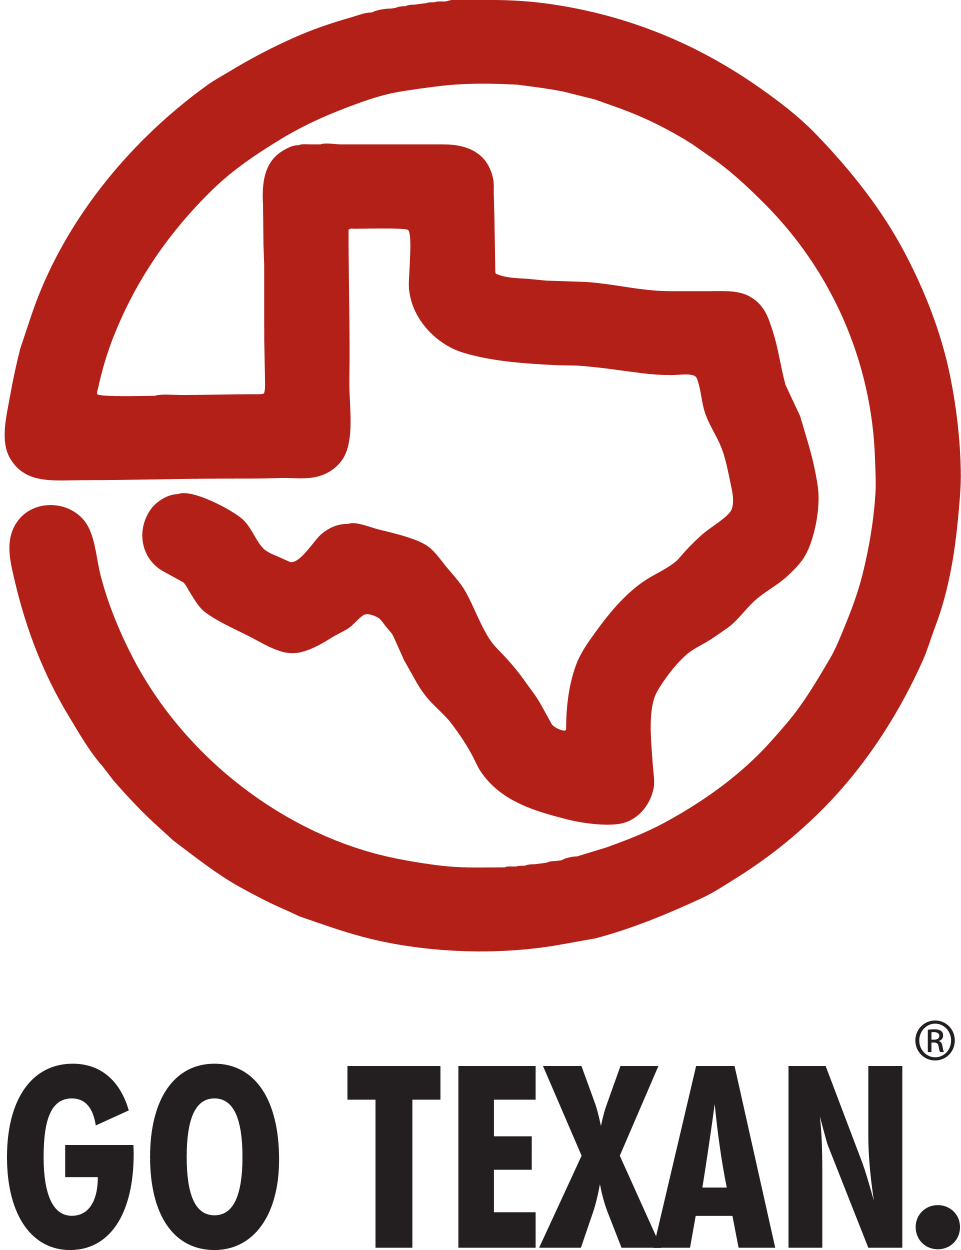 Go texan certified business